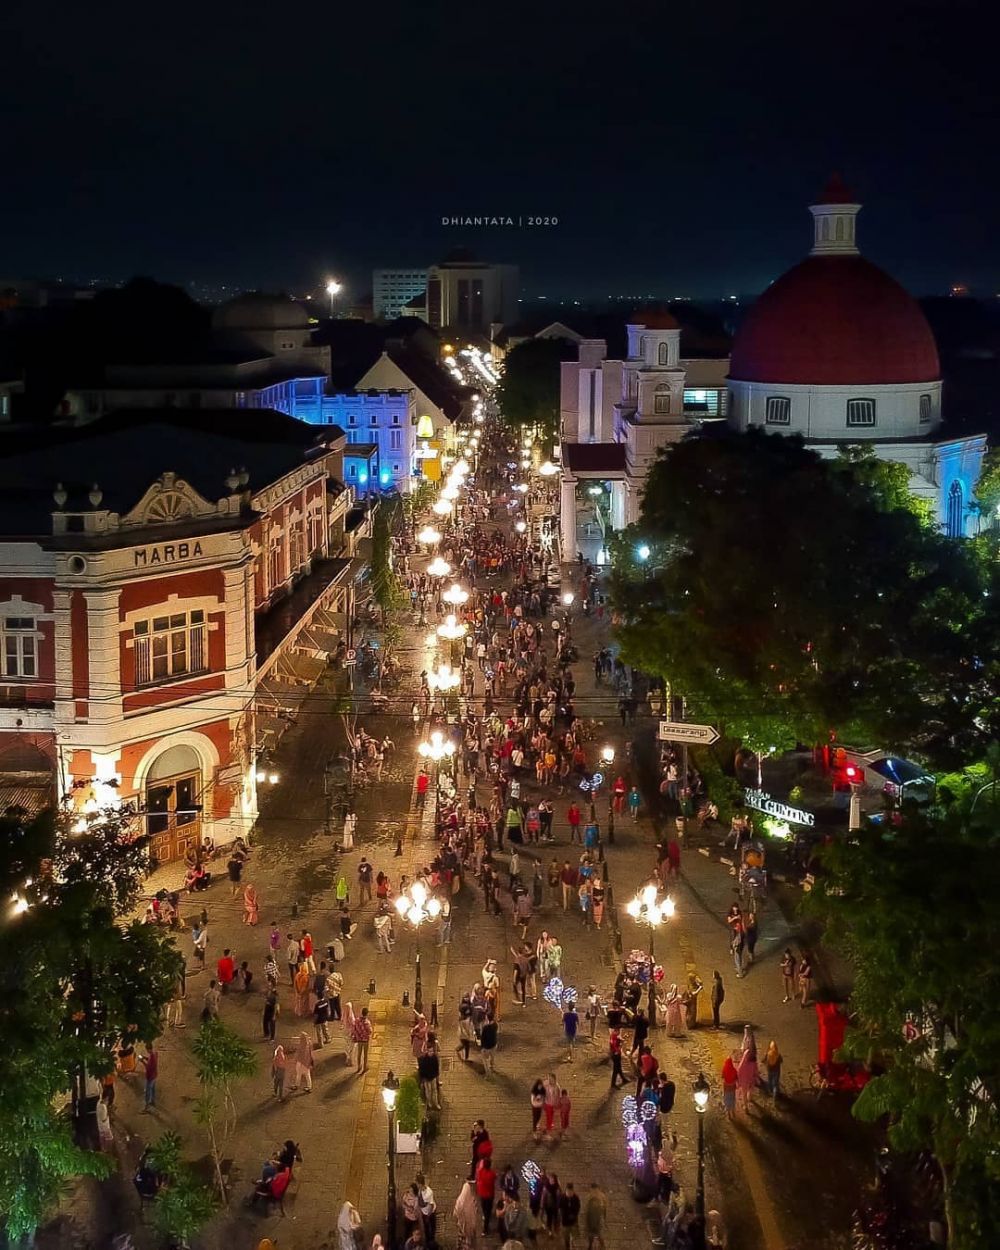 Taman Air Mancur Bubakan Bakal Jadi Museum Sejarah Kota Lama Semarang 